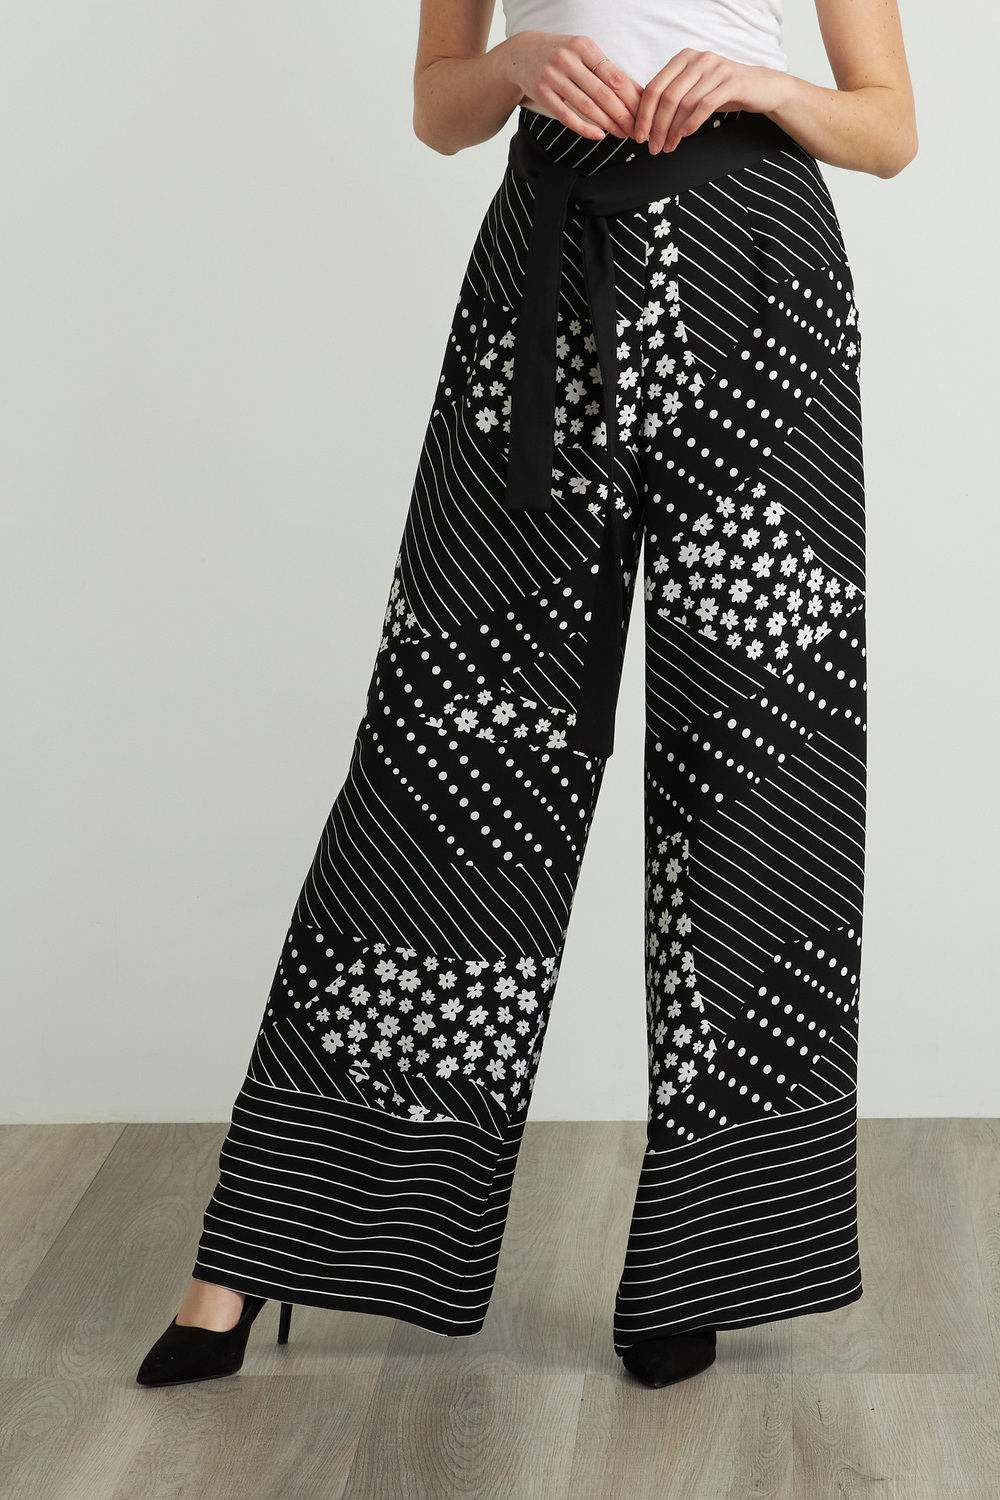 Joseph Ribkoff Printed Pant Style 212248. Black/white